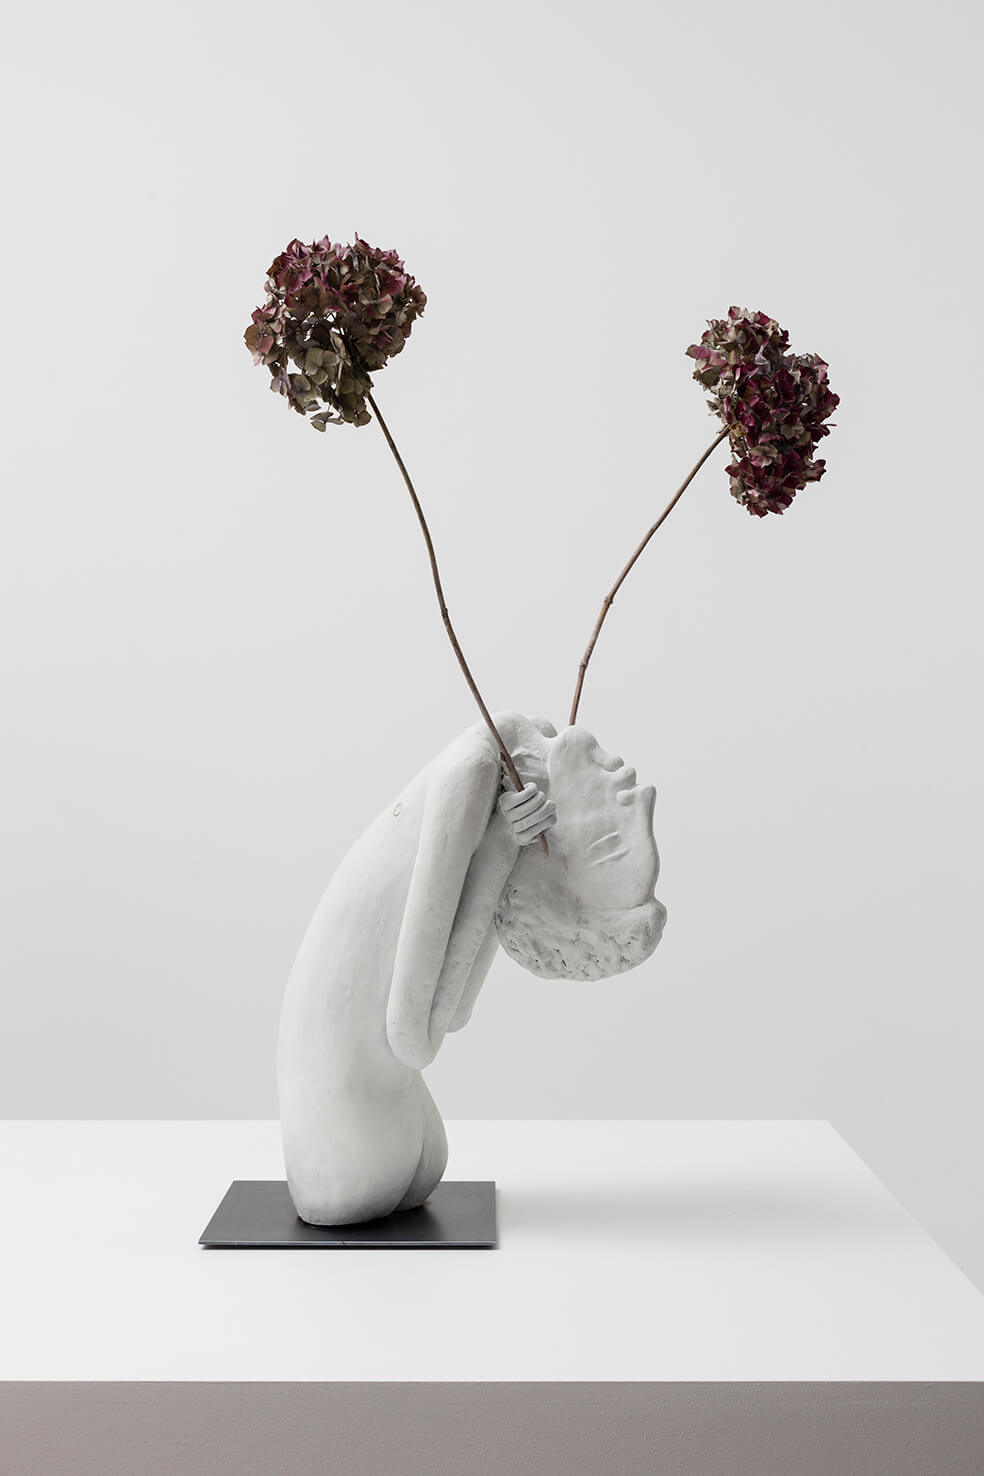 Mark Barker, Untitled (Hydrangea), 2015